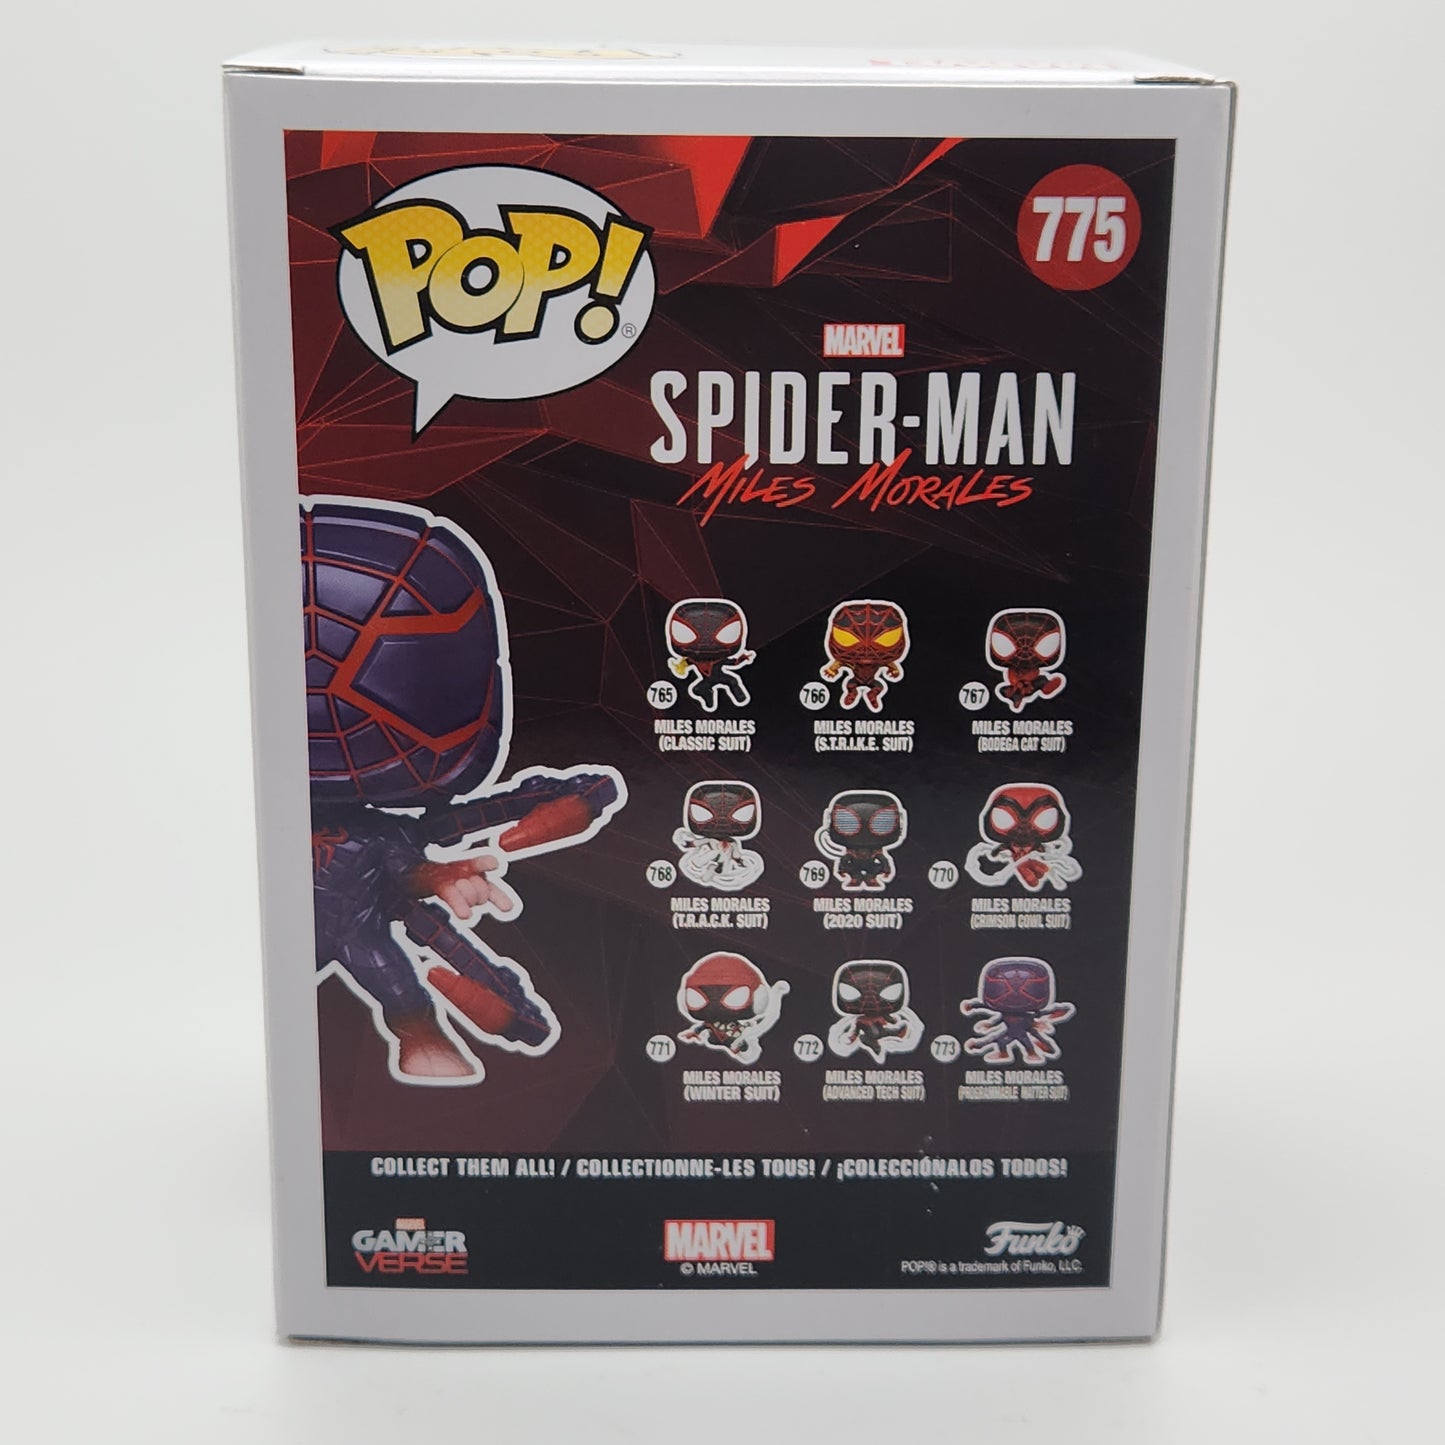 Funko Pop! Marvel- Spider-Man: Miles Morales (Programmable Matter Suit)